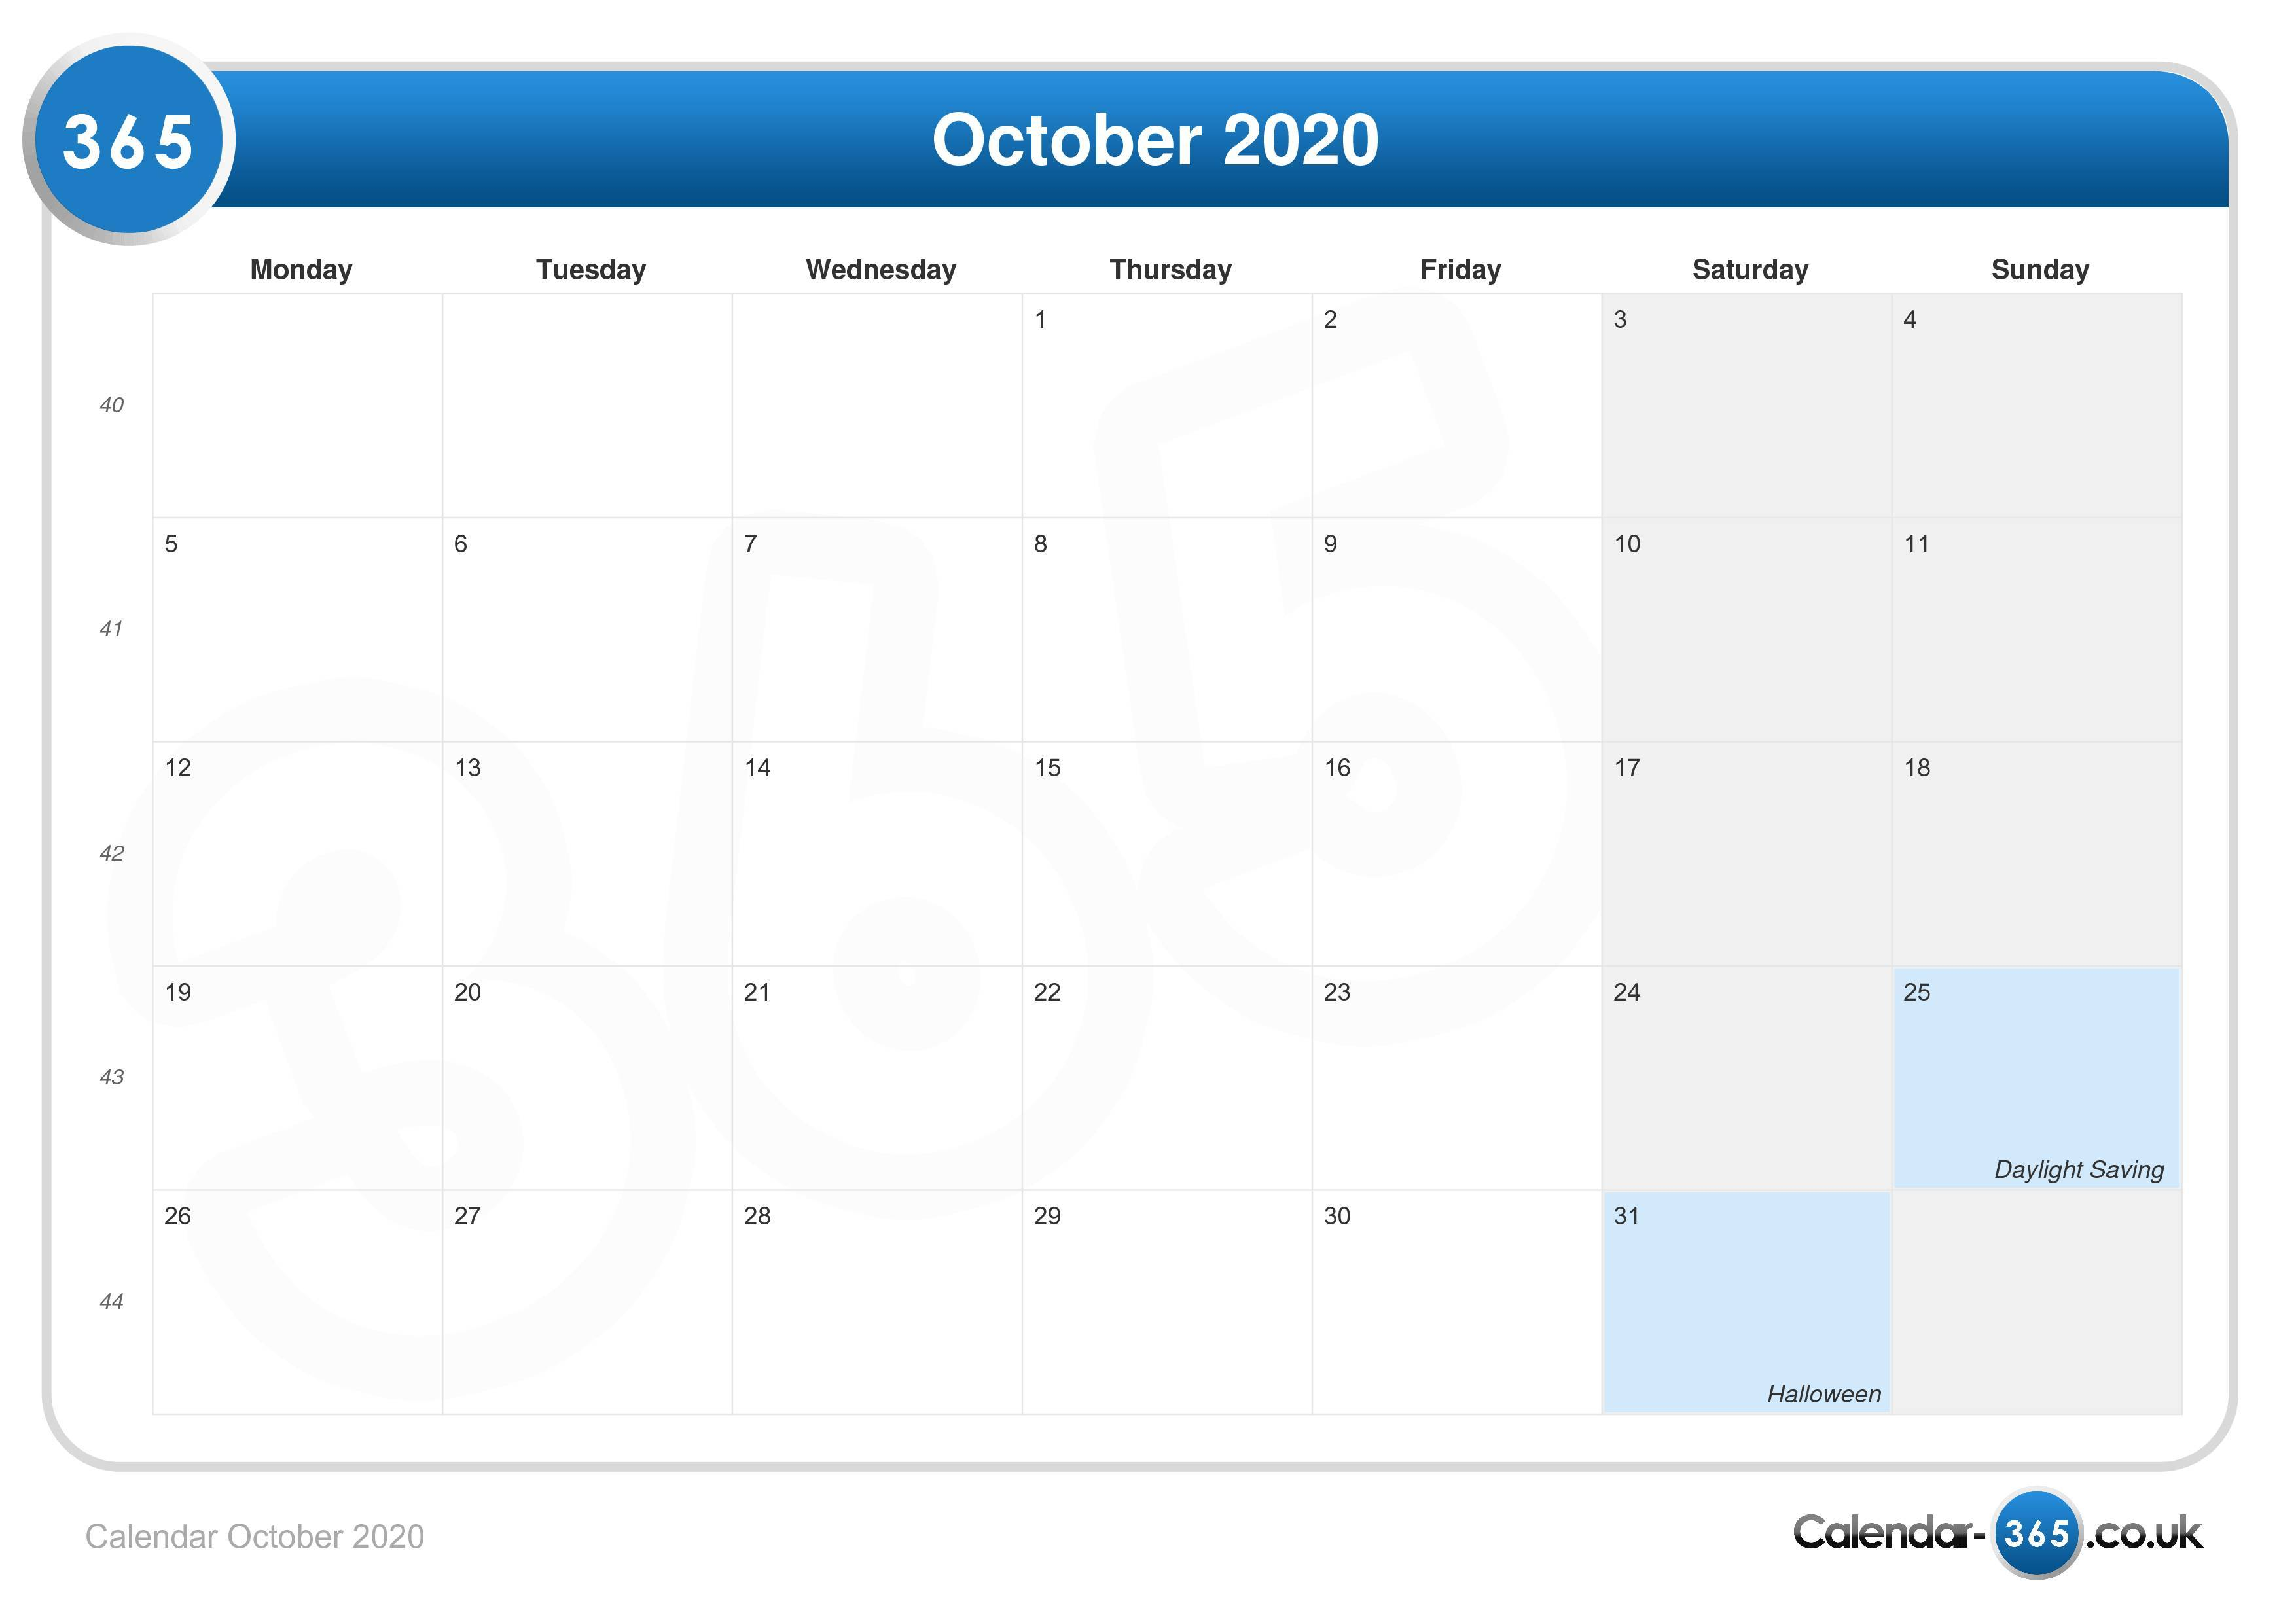 Calendar October 2020 throughout Lunar Calendar October 2020